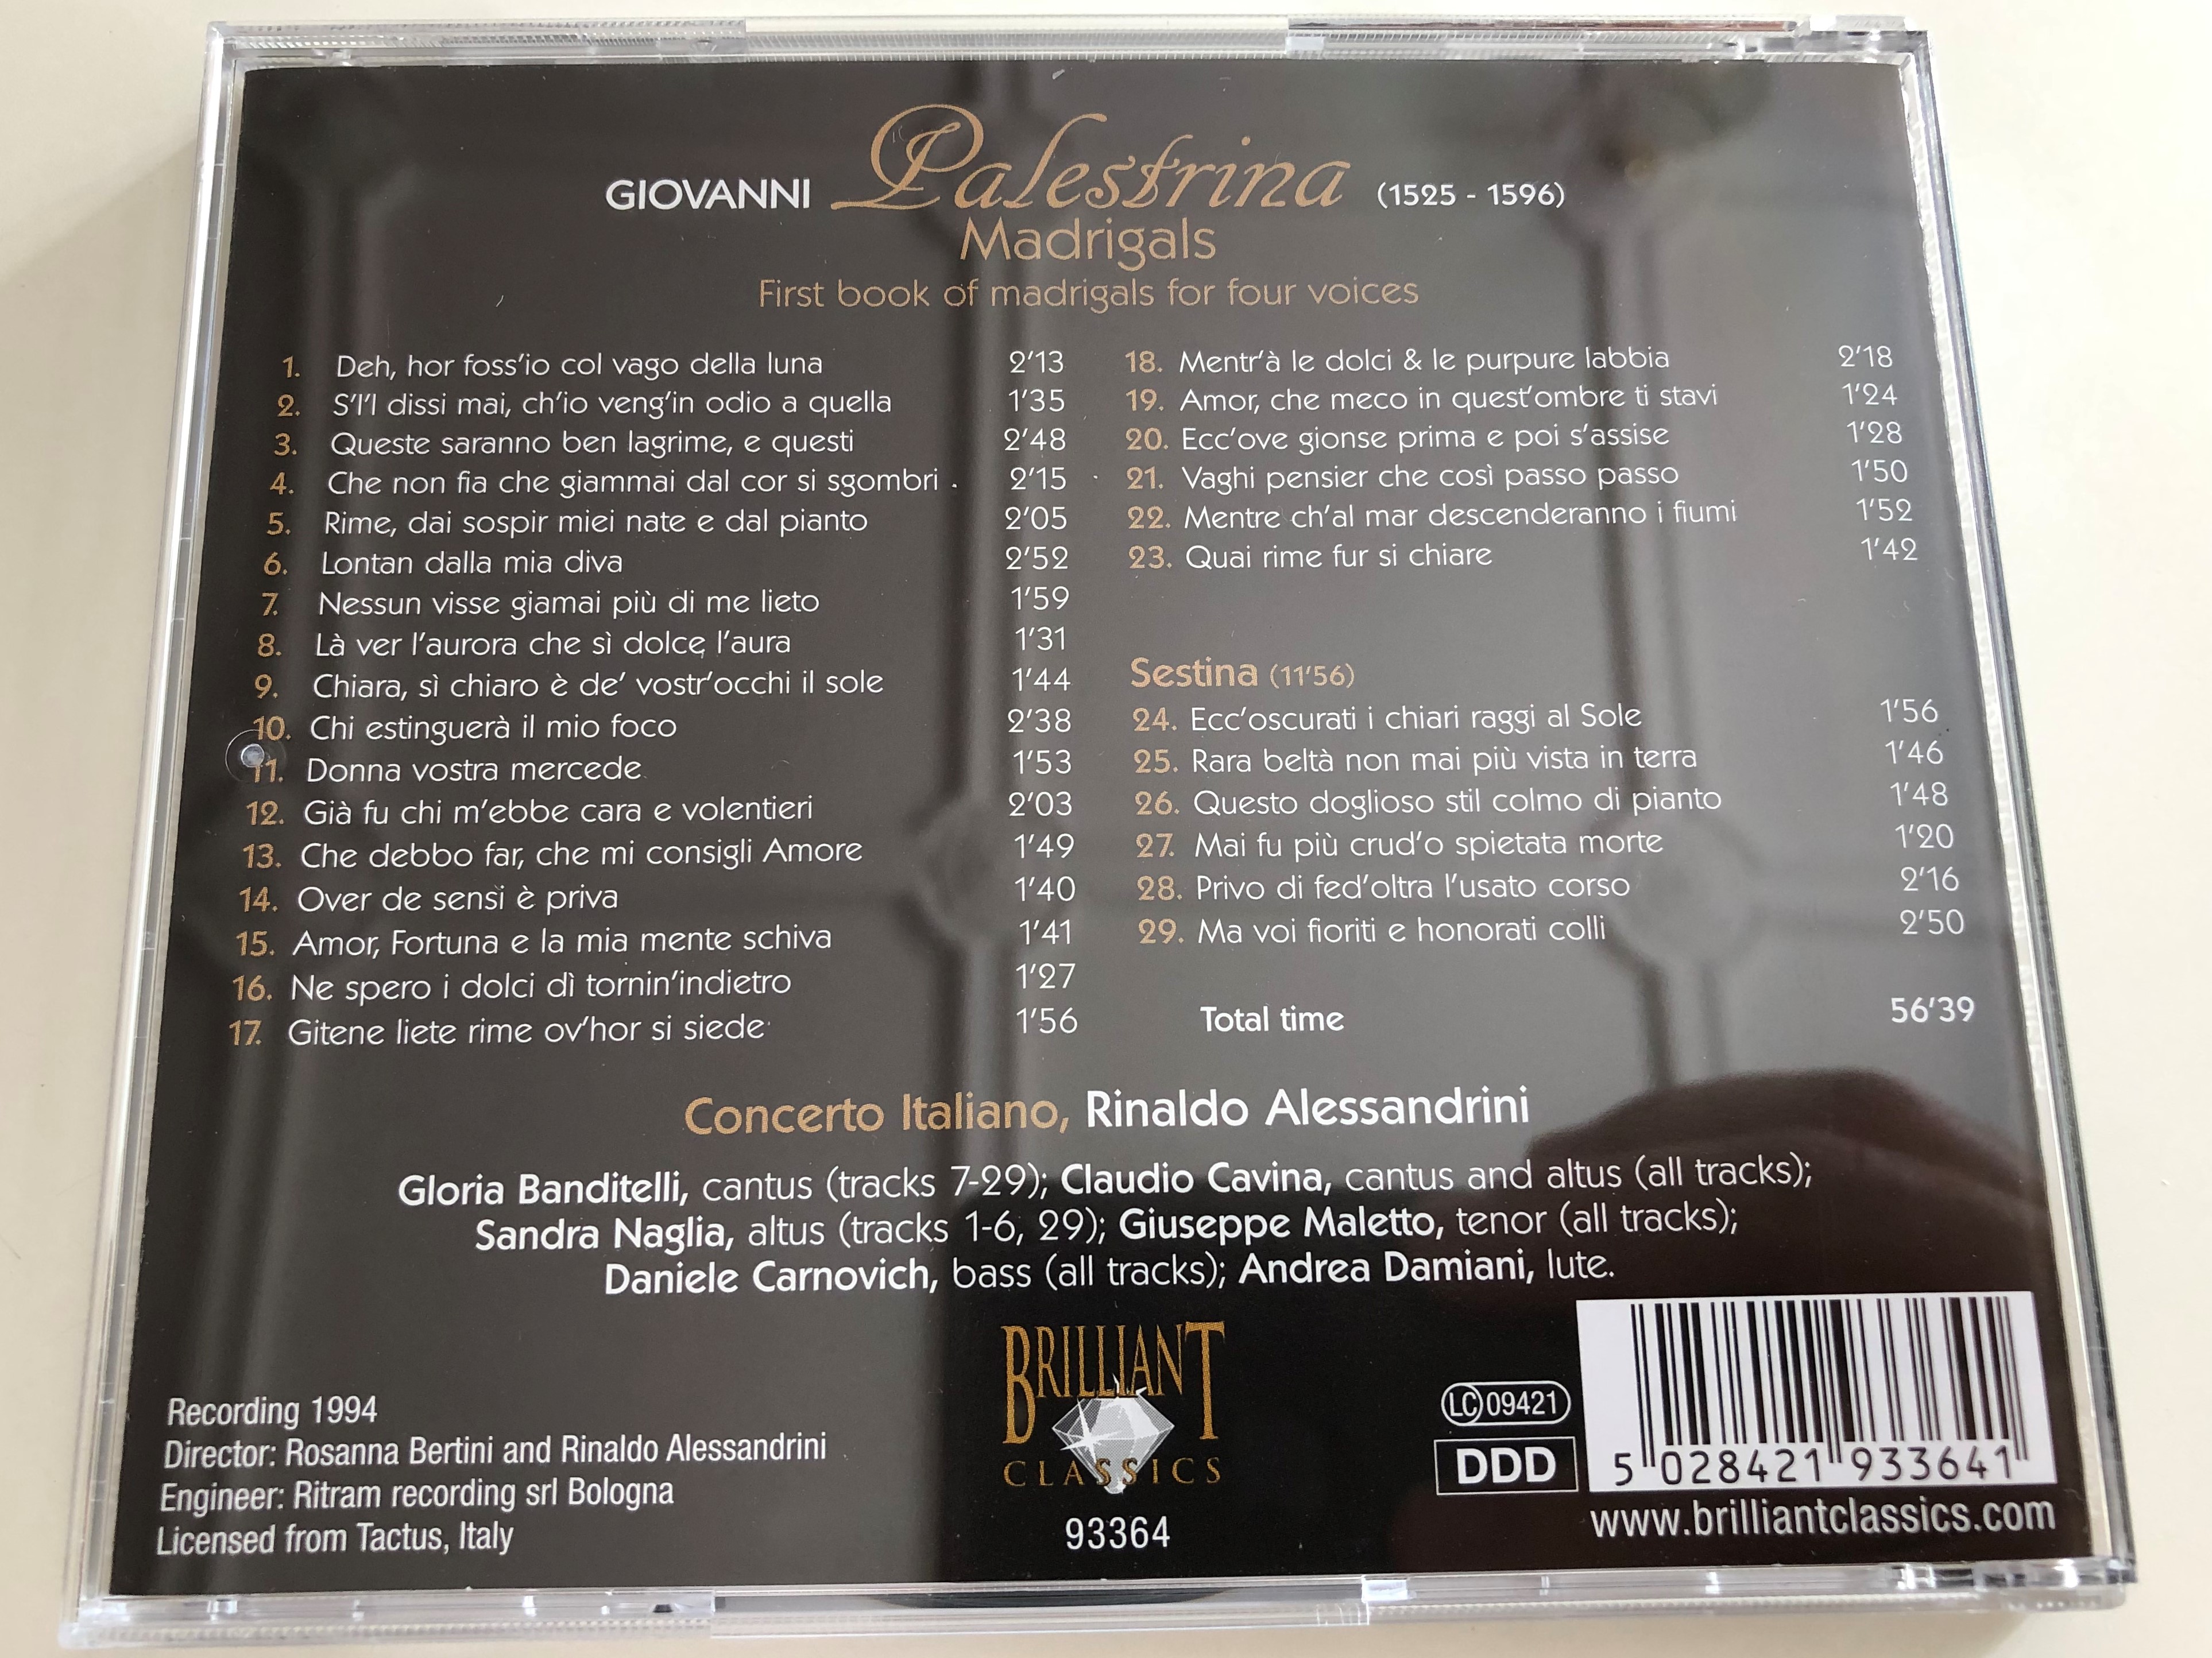 giovanni-palestrina-madrigals-first-book-of-madrigals-for-four-voices-concerto-italiano-cond.-rinaldo-alessandrini-93364-audio-cd-1994-7-.jpg